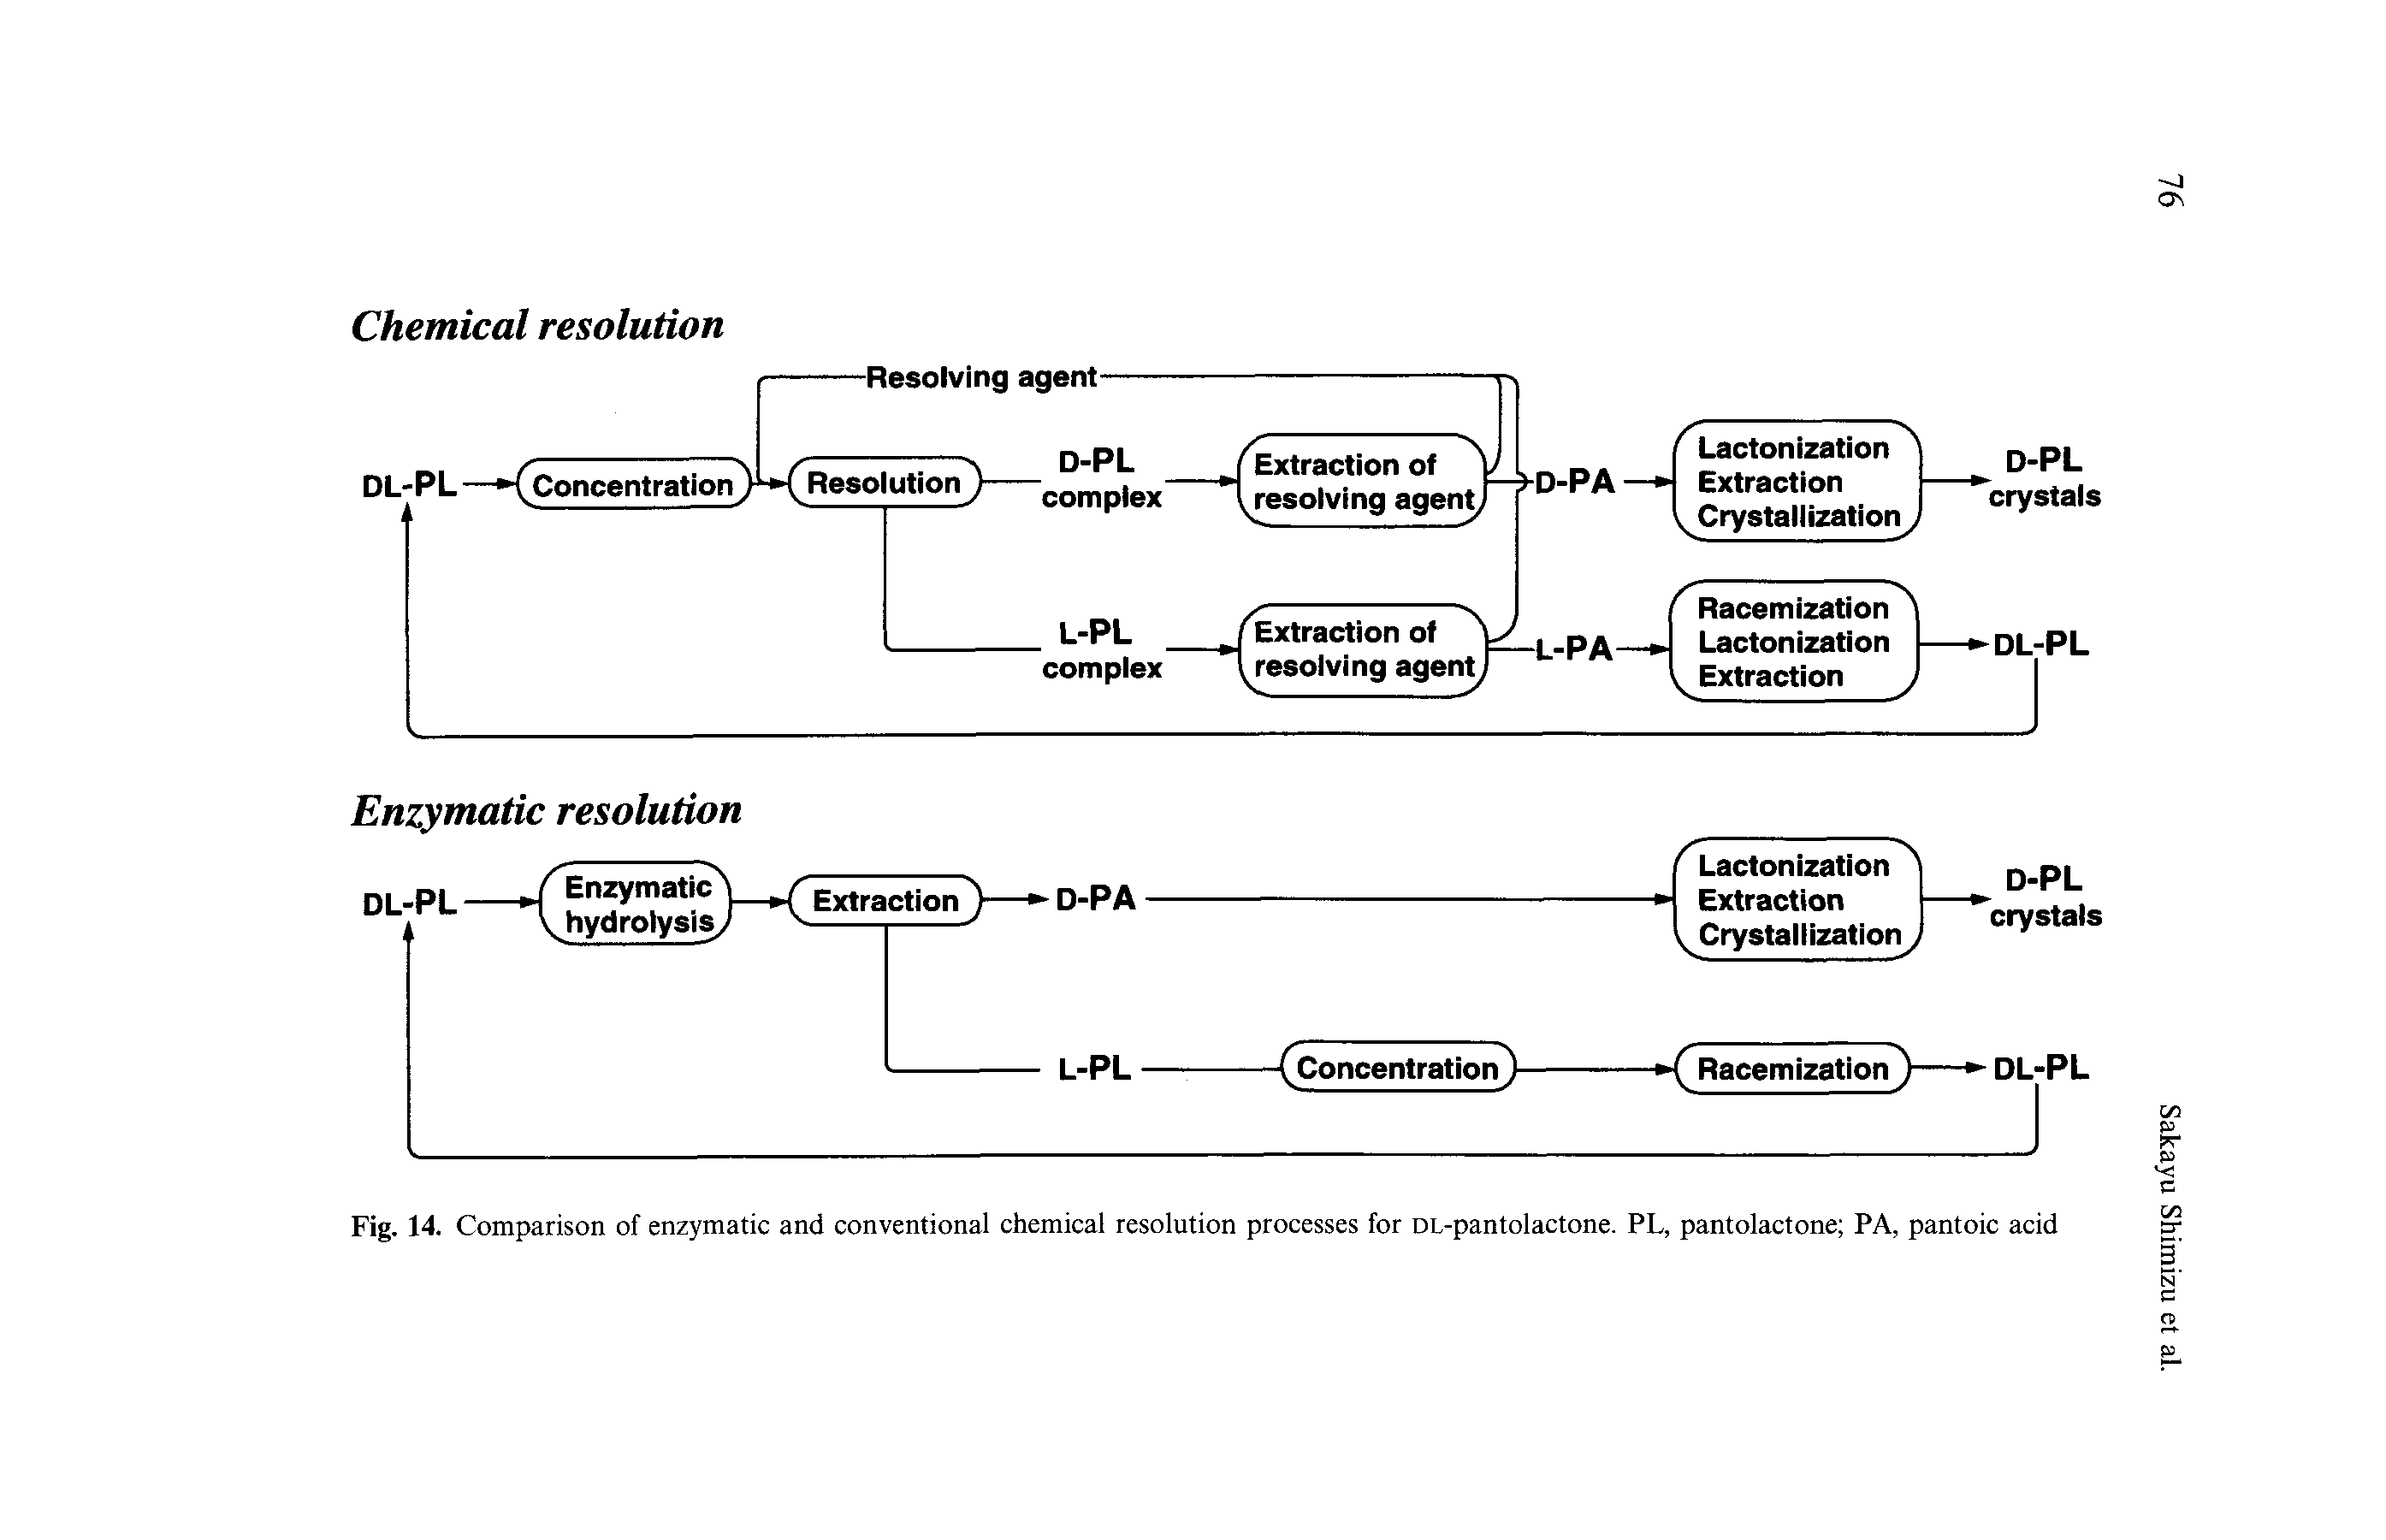 Fig. 14. Comparison of enzymatic and conventional chemical resolution processes for DL-pantolactone. PL, pantolactone PA, pantoic acid...